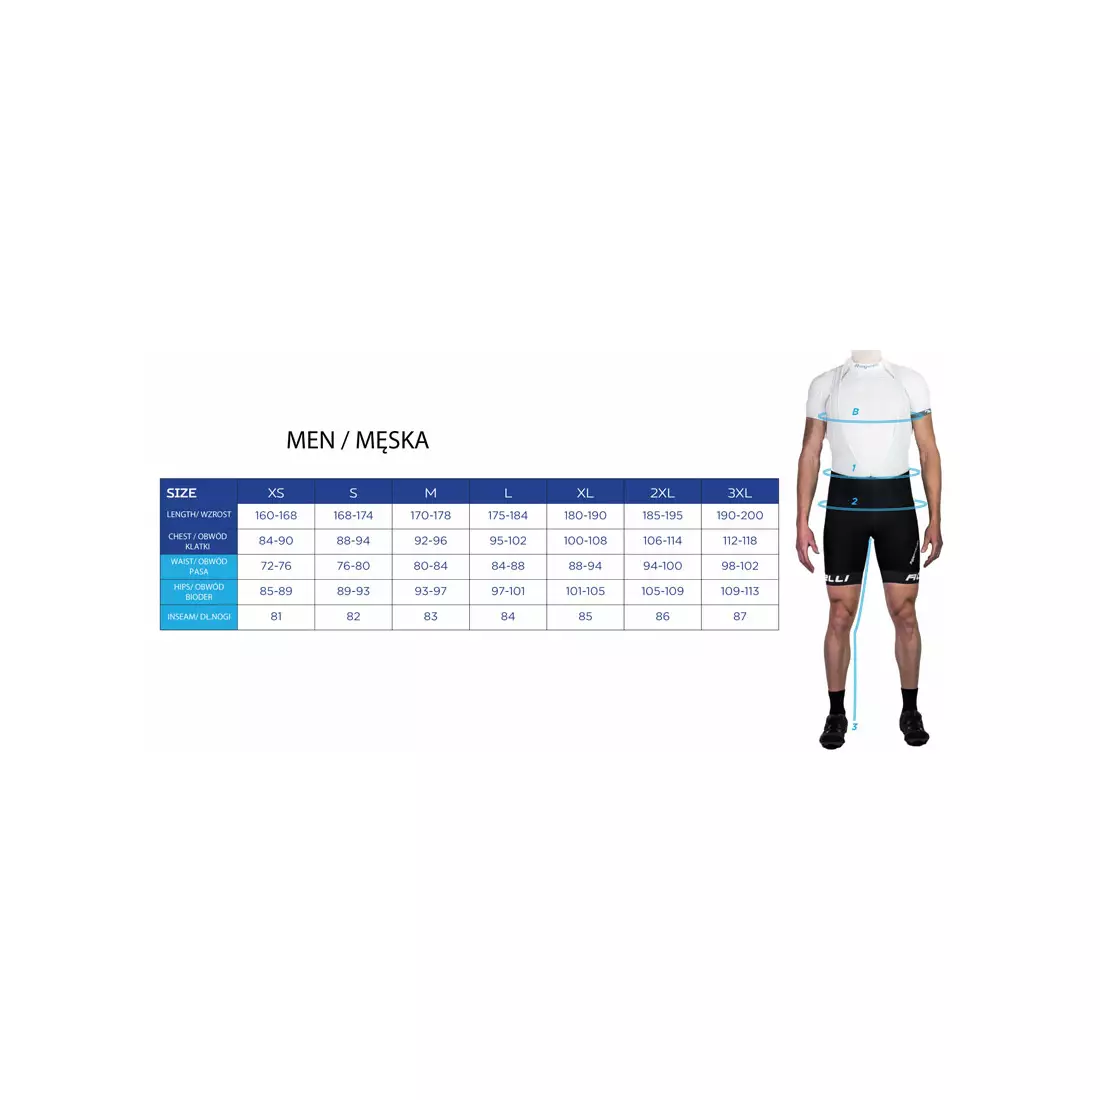 ROGELLI RUN STRUCTURE 830.740 - men's running shorts, navy blue